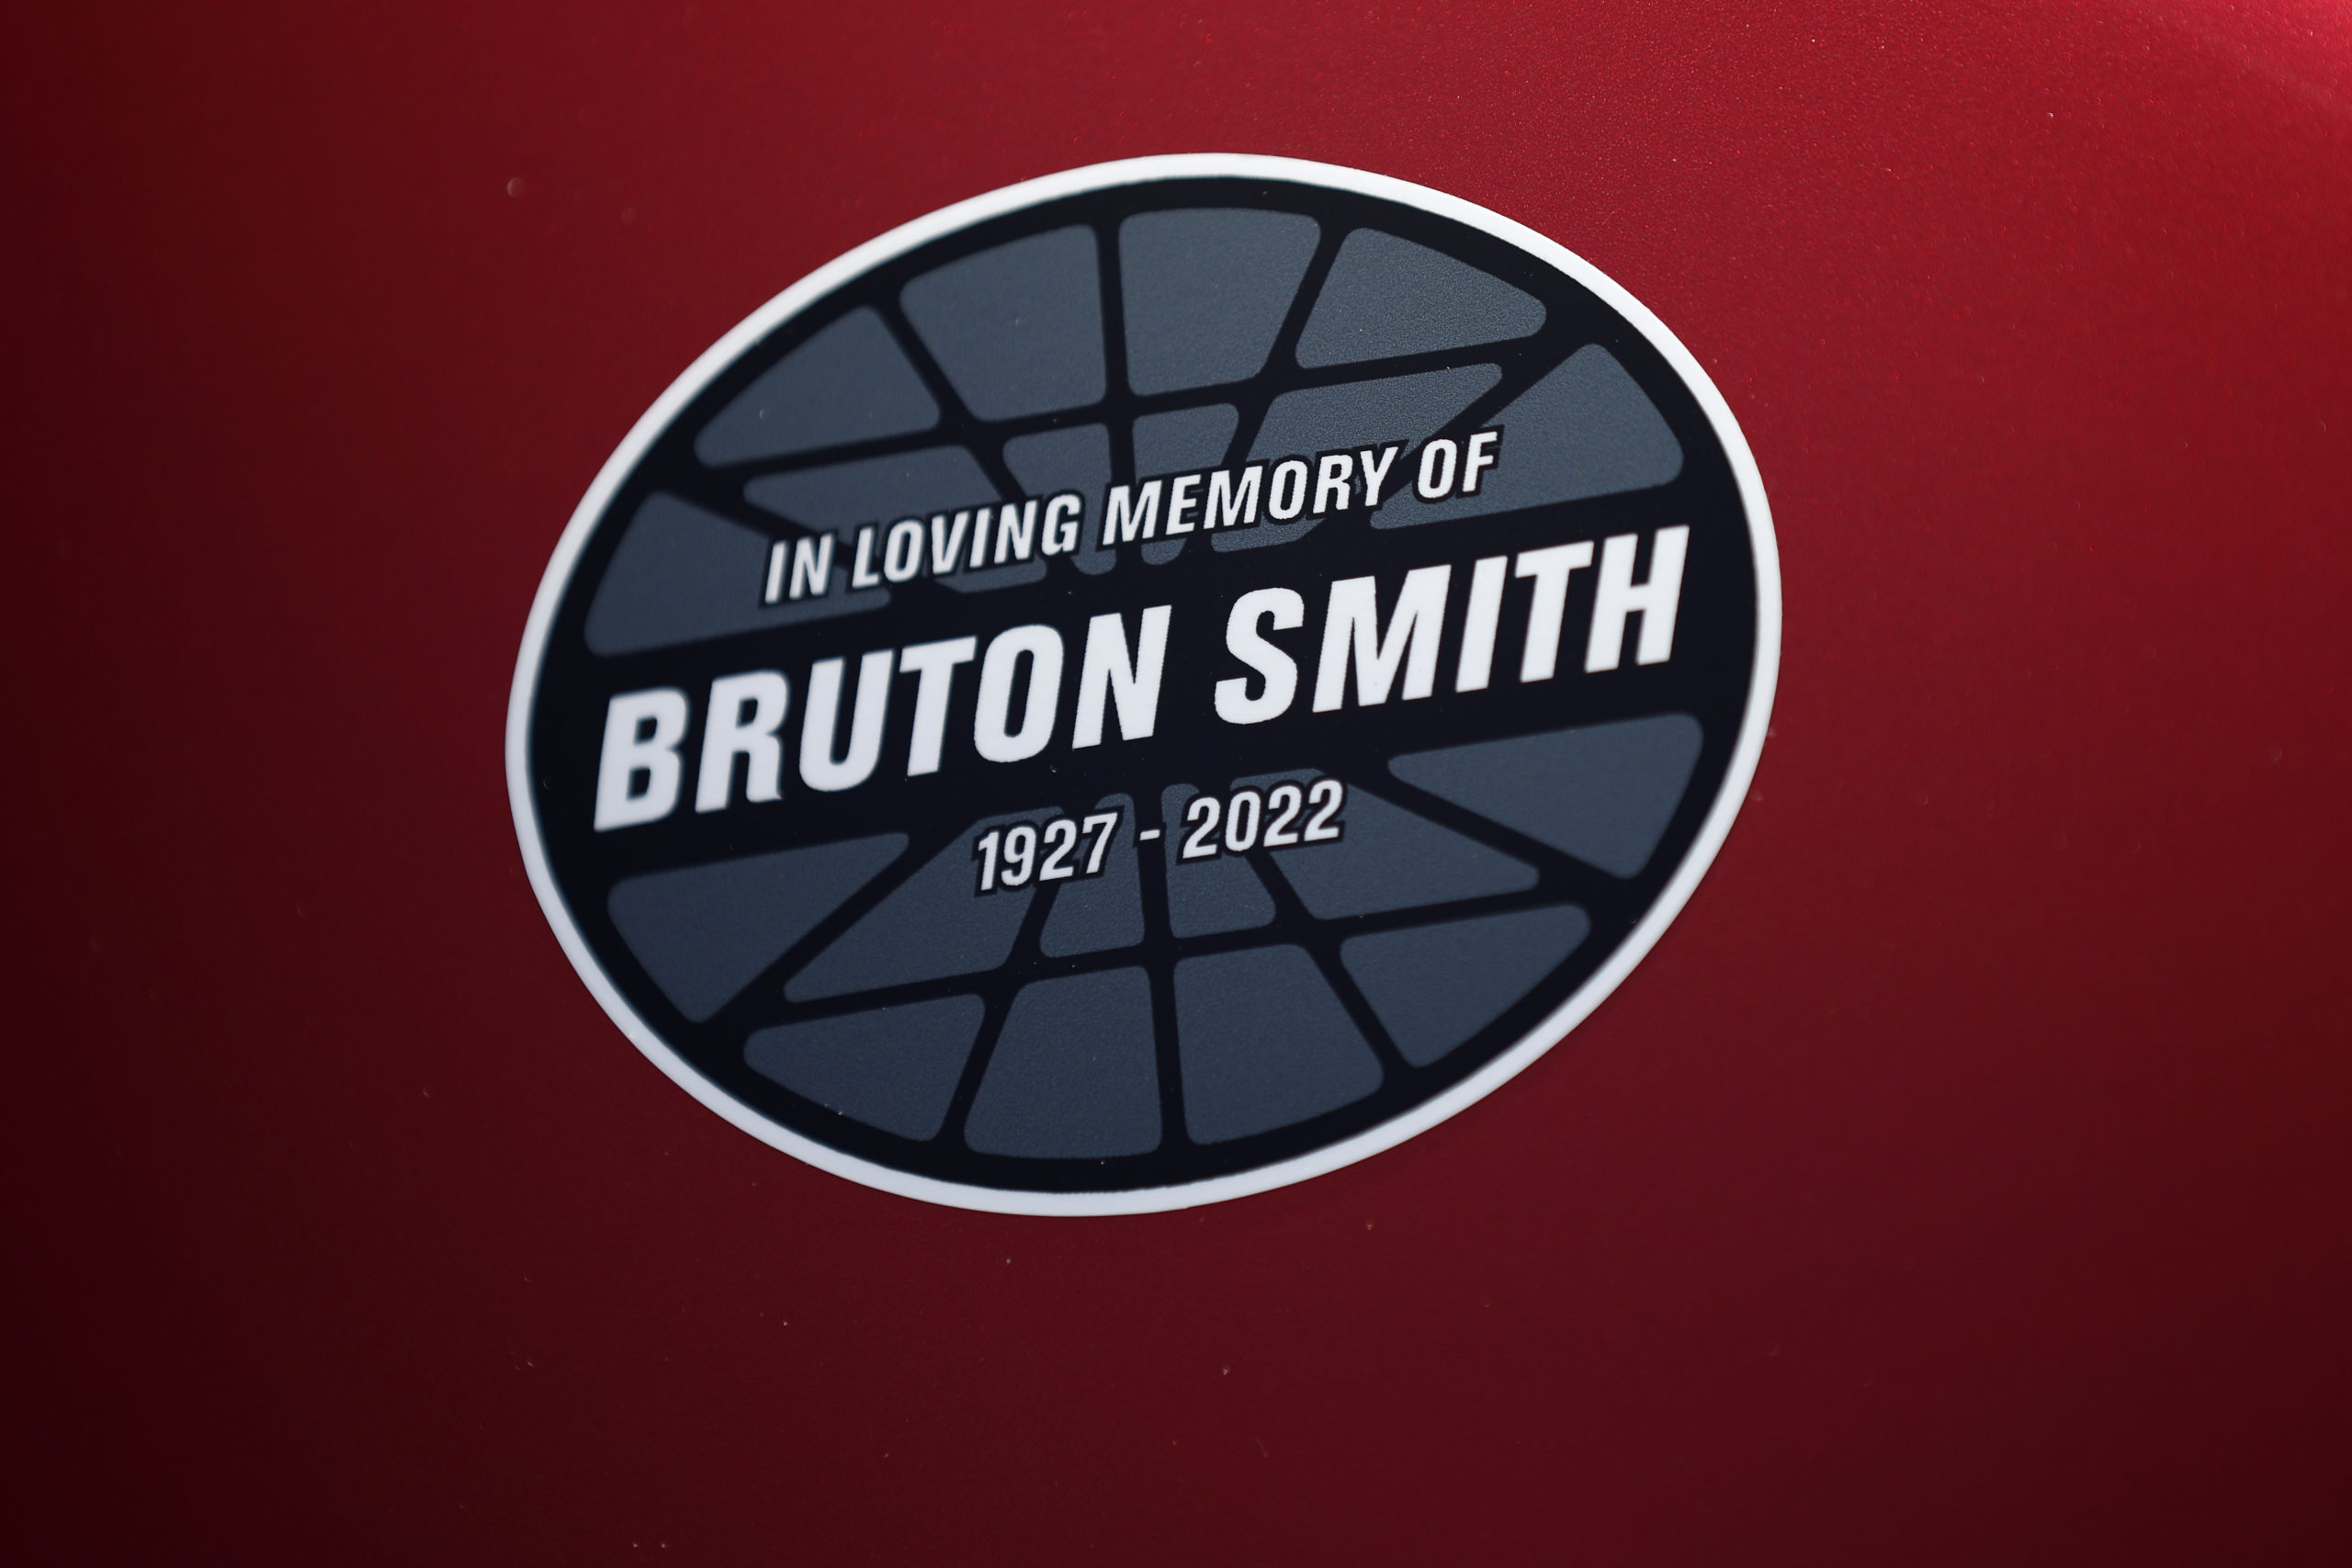 Bruton Smith commemoration decal closeup